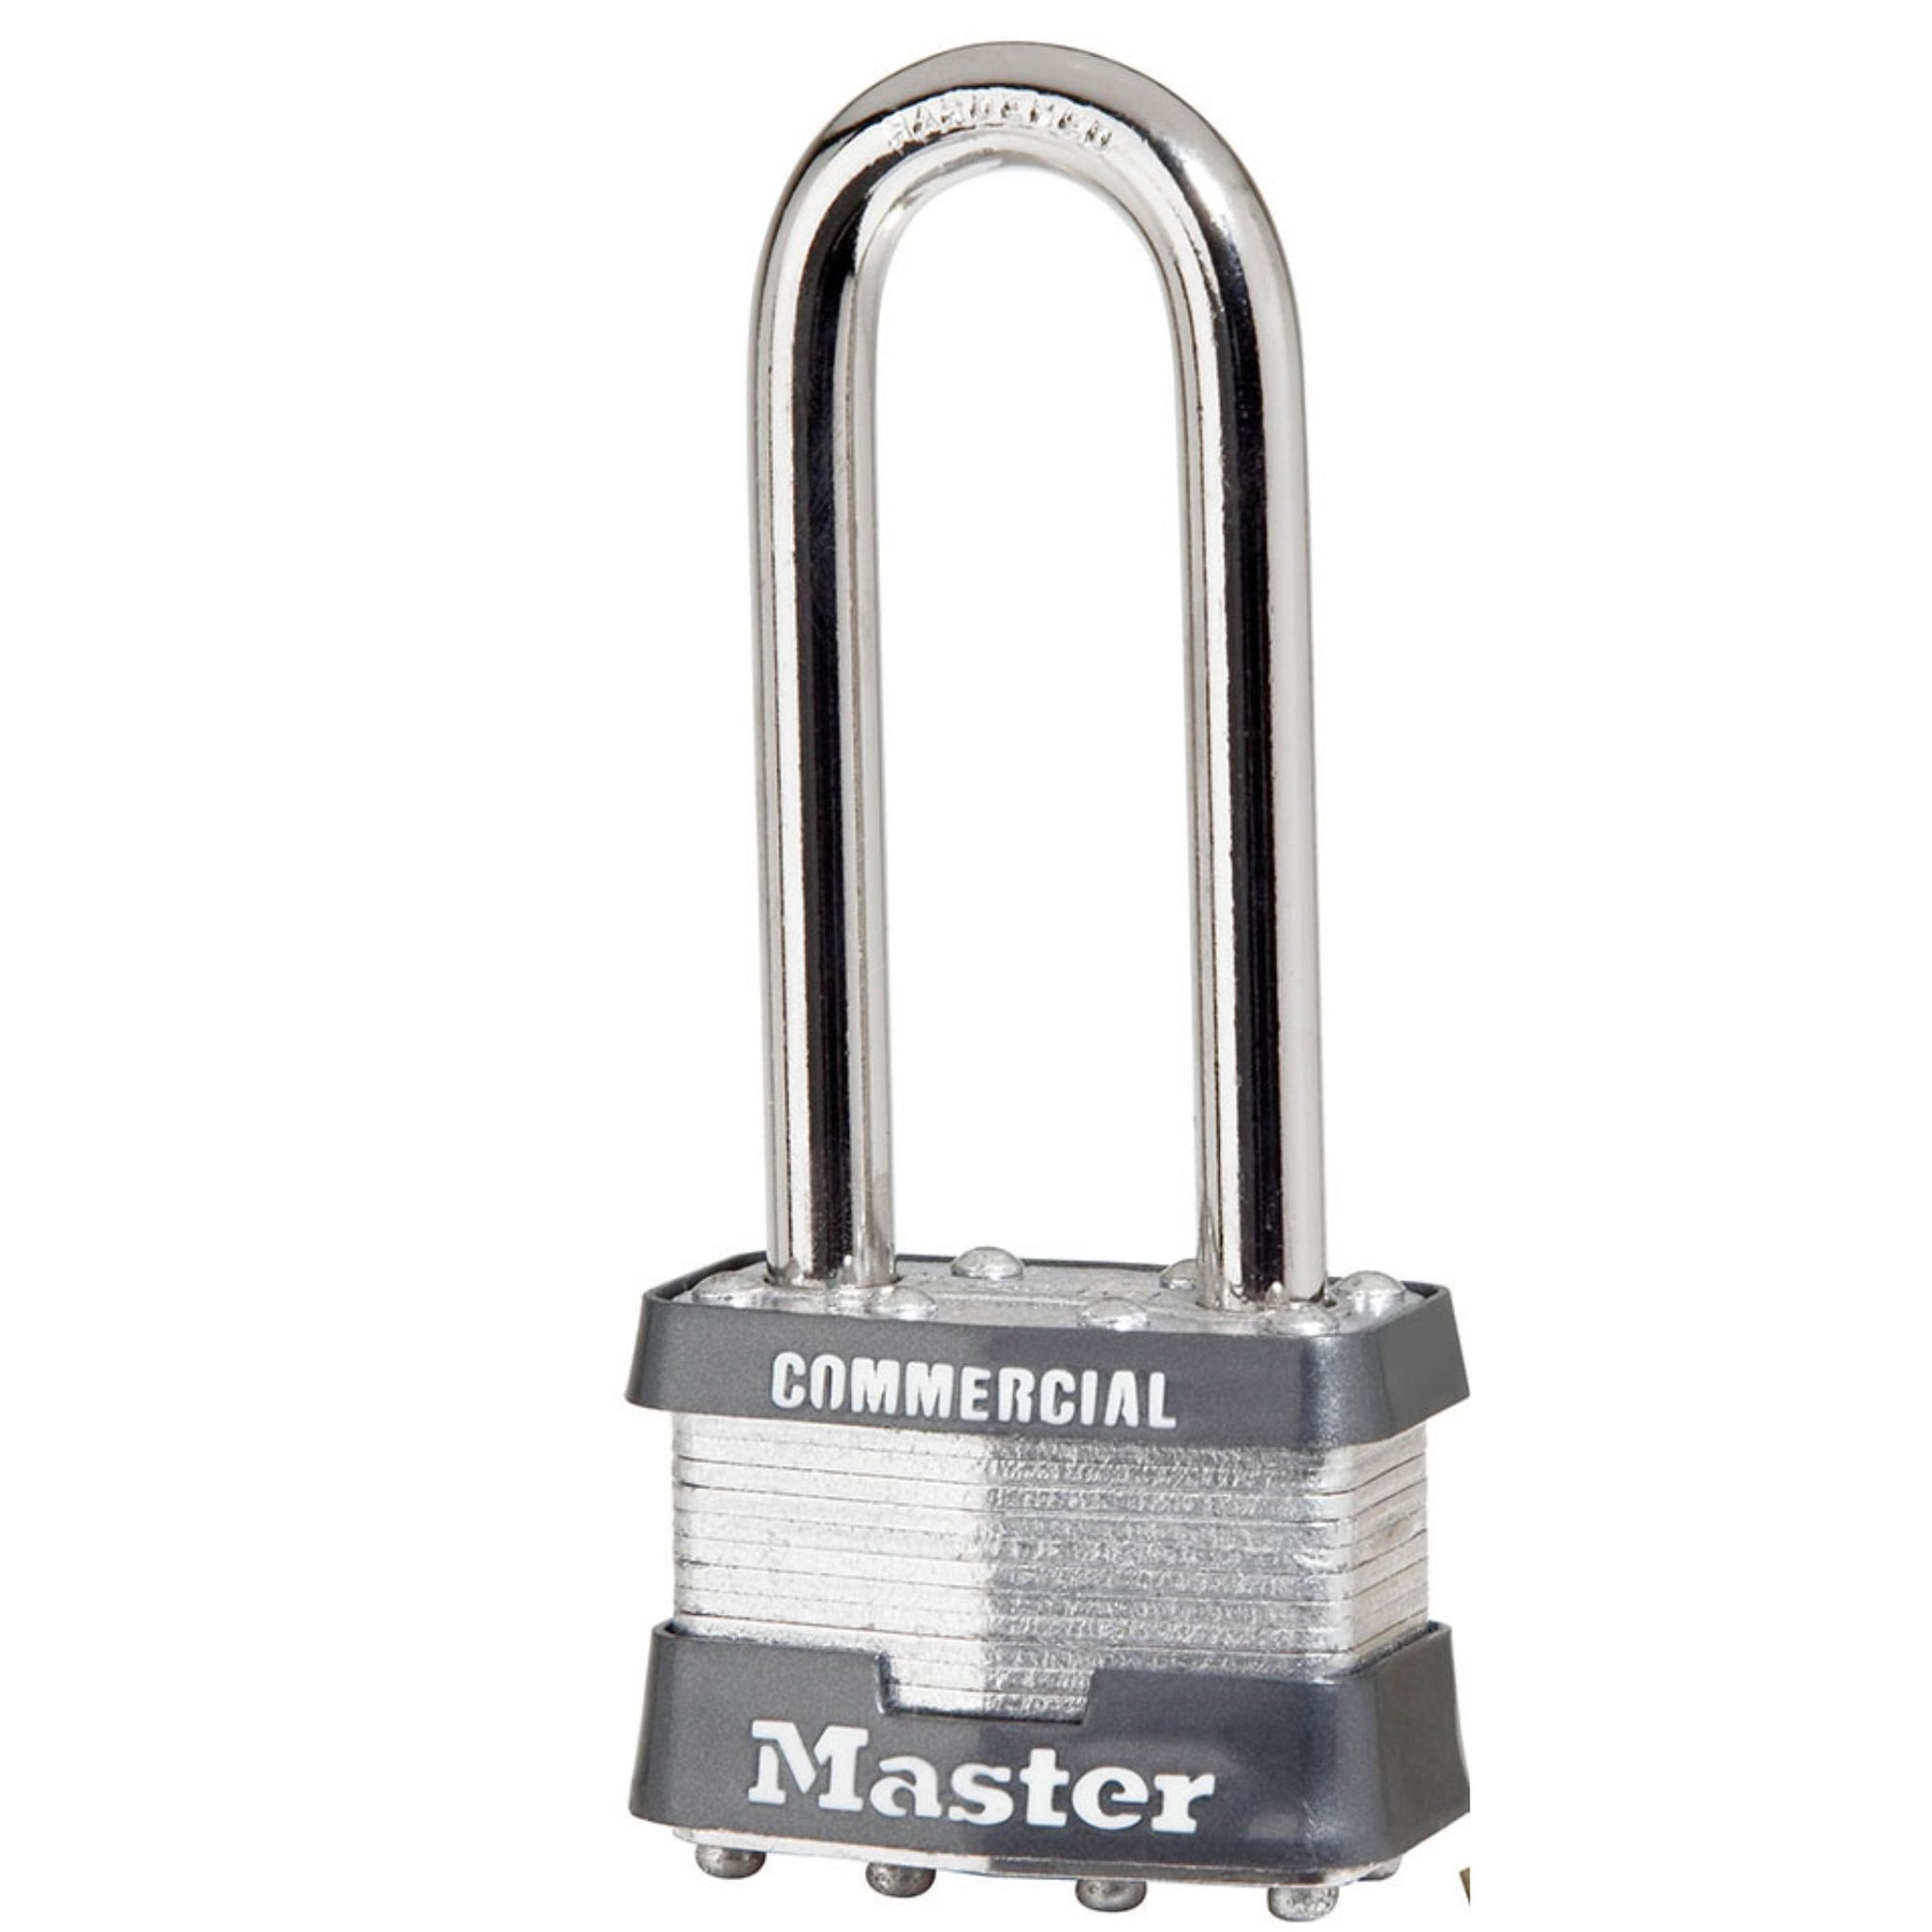 Master Lock 1KALJ 2001 Lock Laminated Steel No. 1LJ Series Padlocks Keyed to Match Existing Key Number KA2001 - The Lock Source